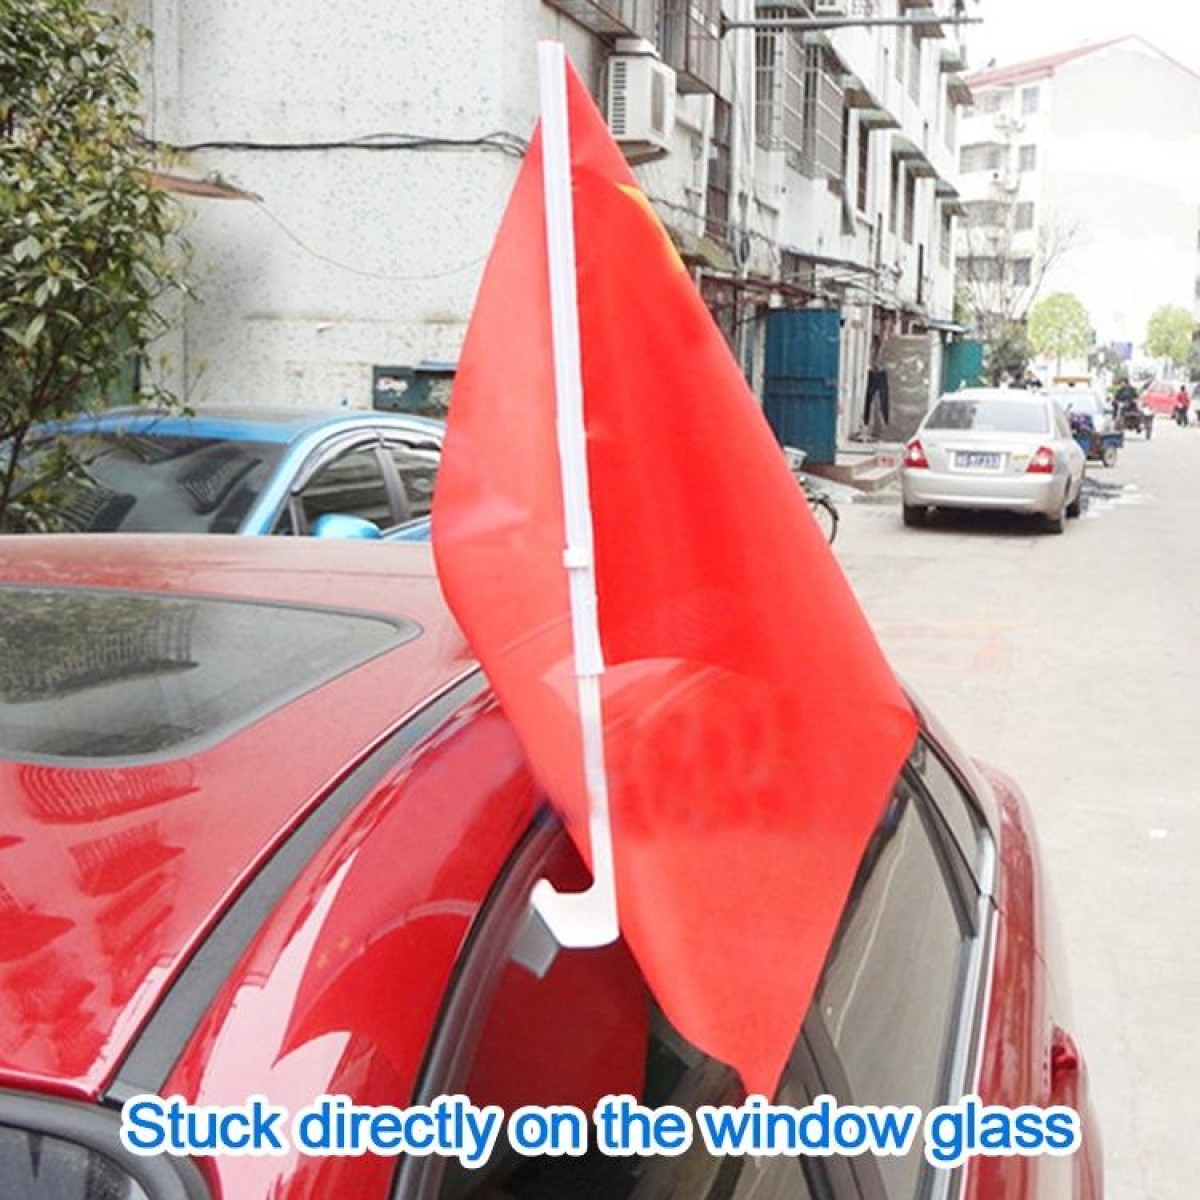 10 PCS 52cm Clip-type Car Window Plastic Flagpole, No Flag